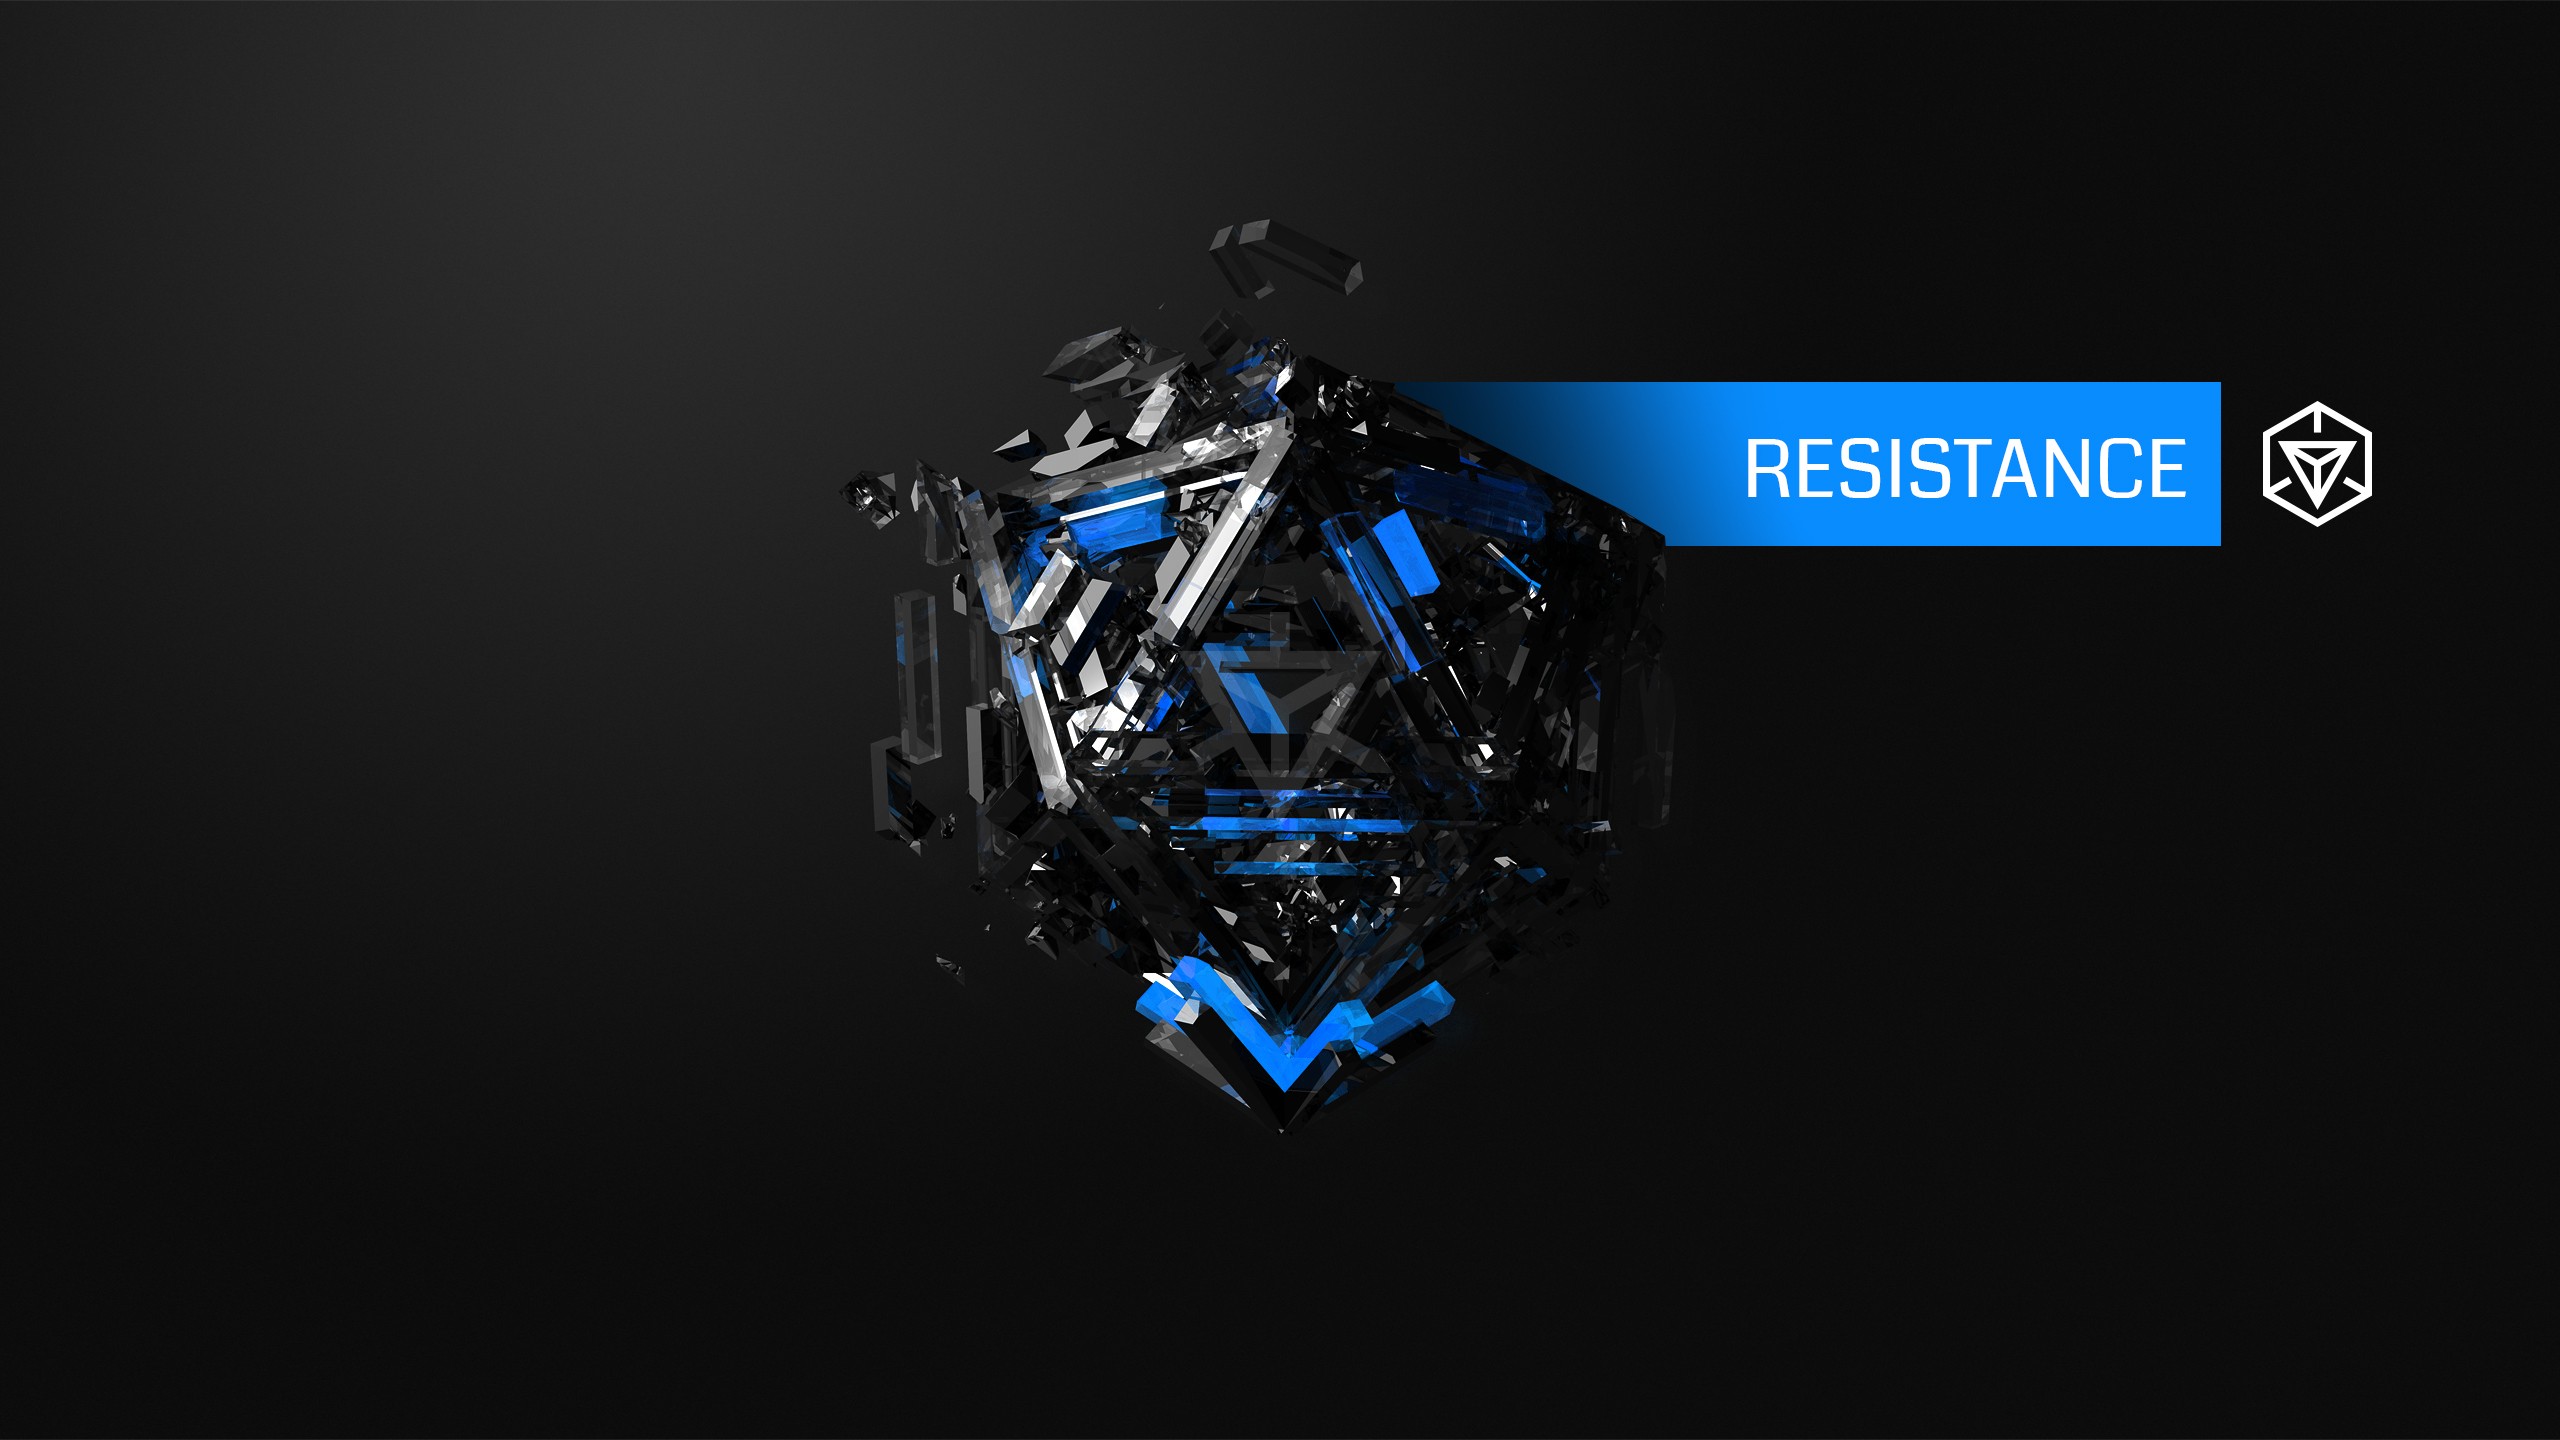 General 2560x1440 hexagon Resistance Ingress blue Justin Maller digital art abstract 3D Abstract